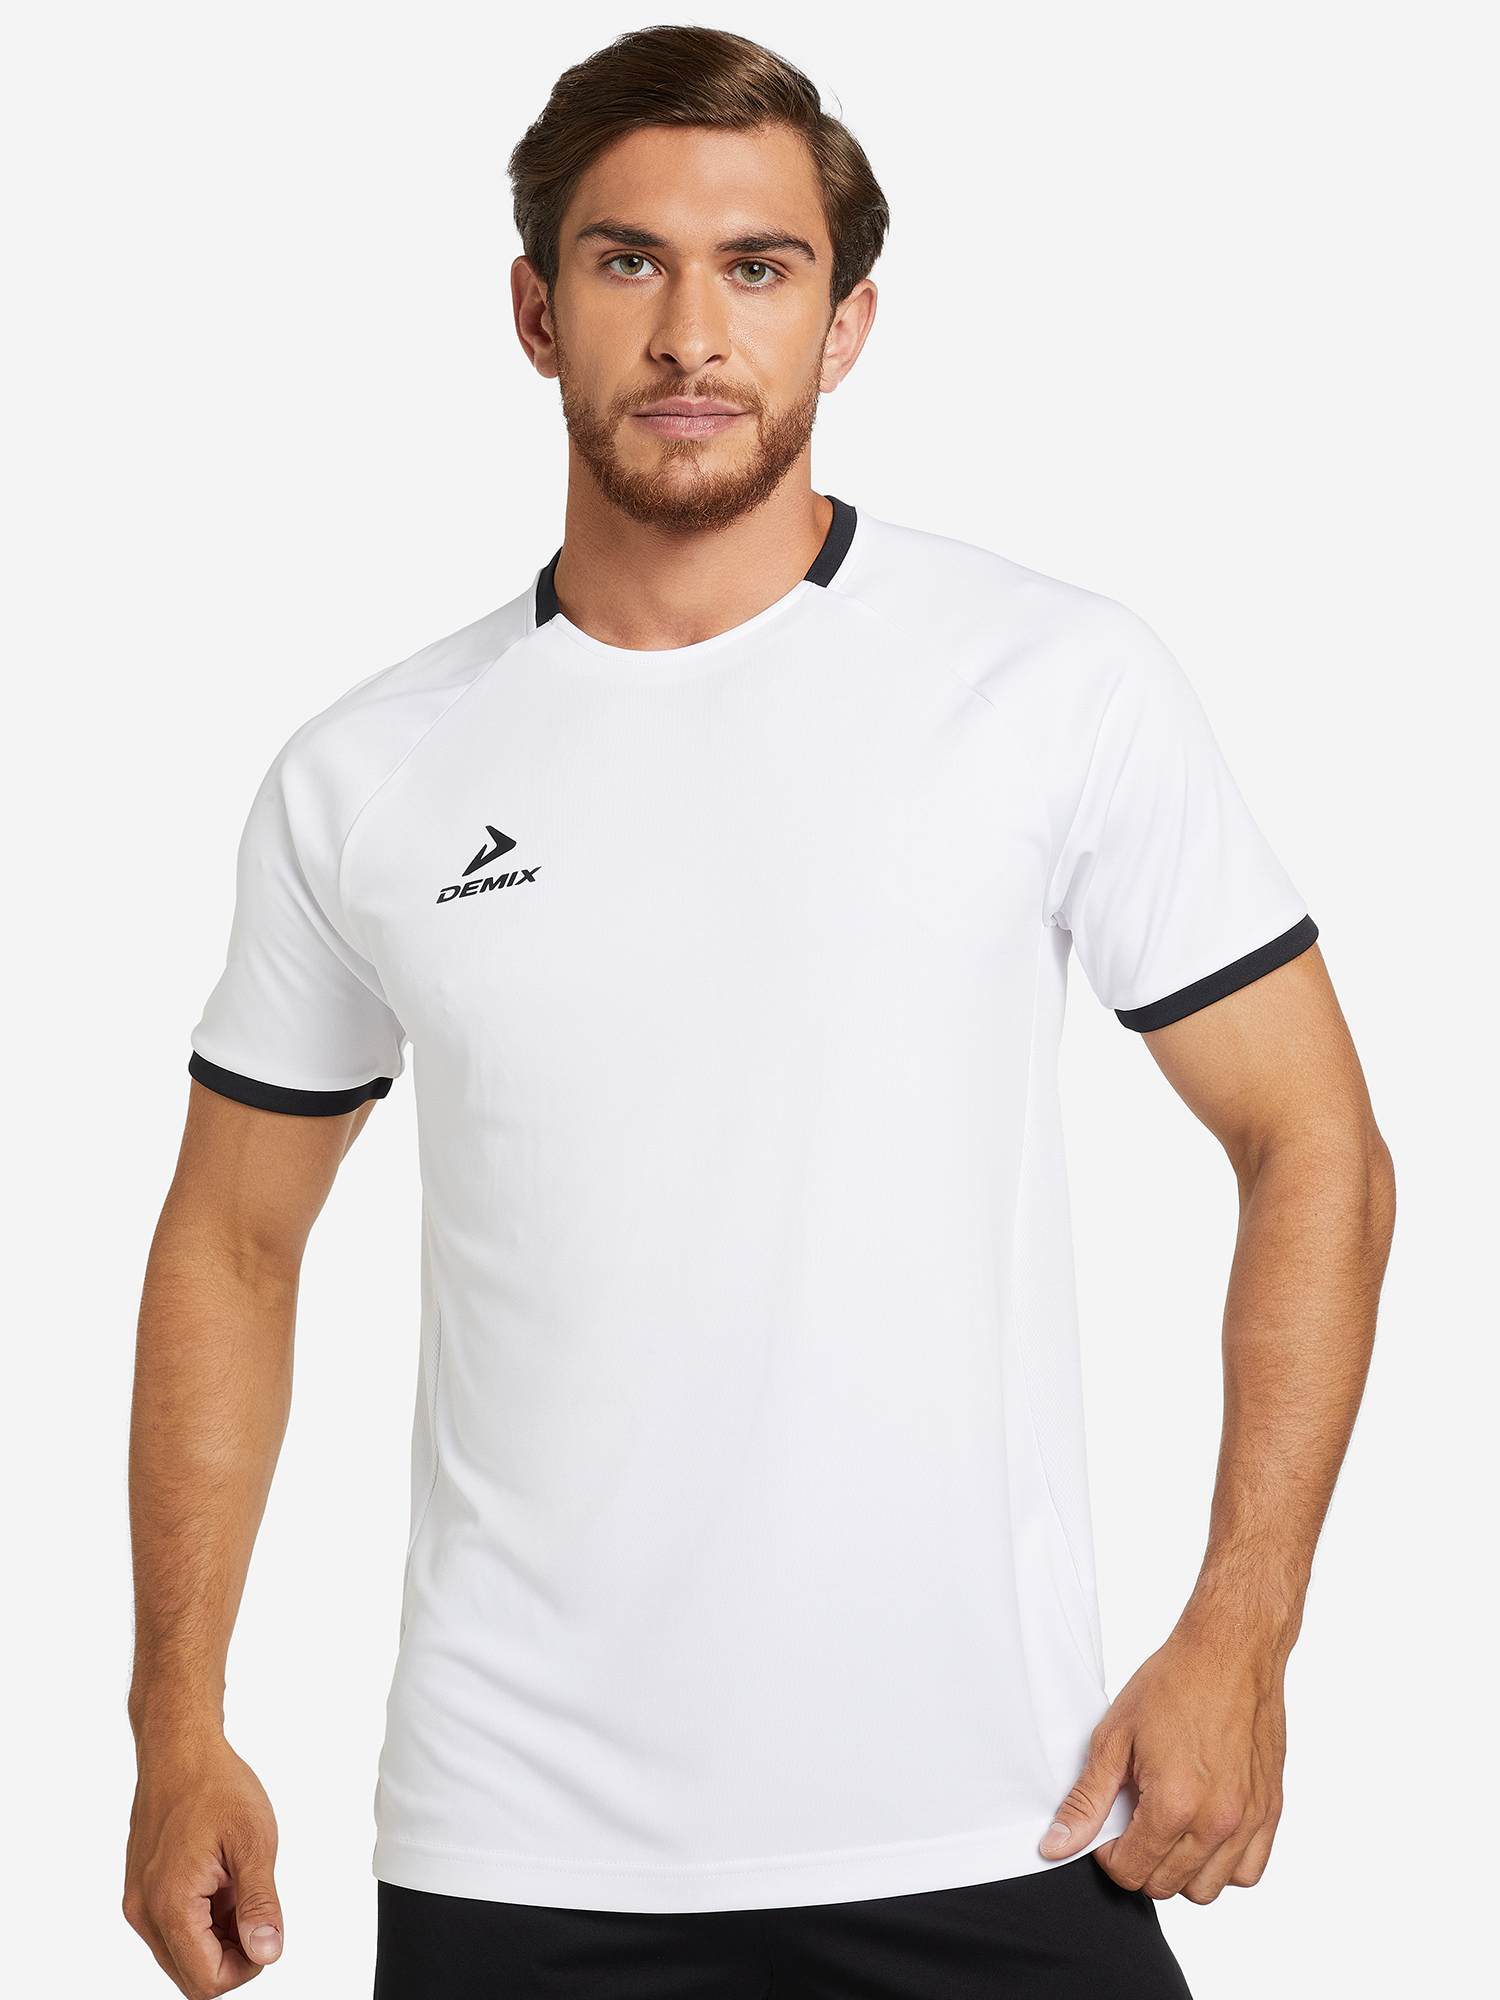 Футболка мужская Demix Division, Белый футболка мужская demix pace белый